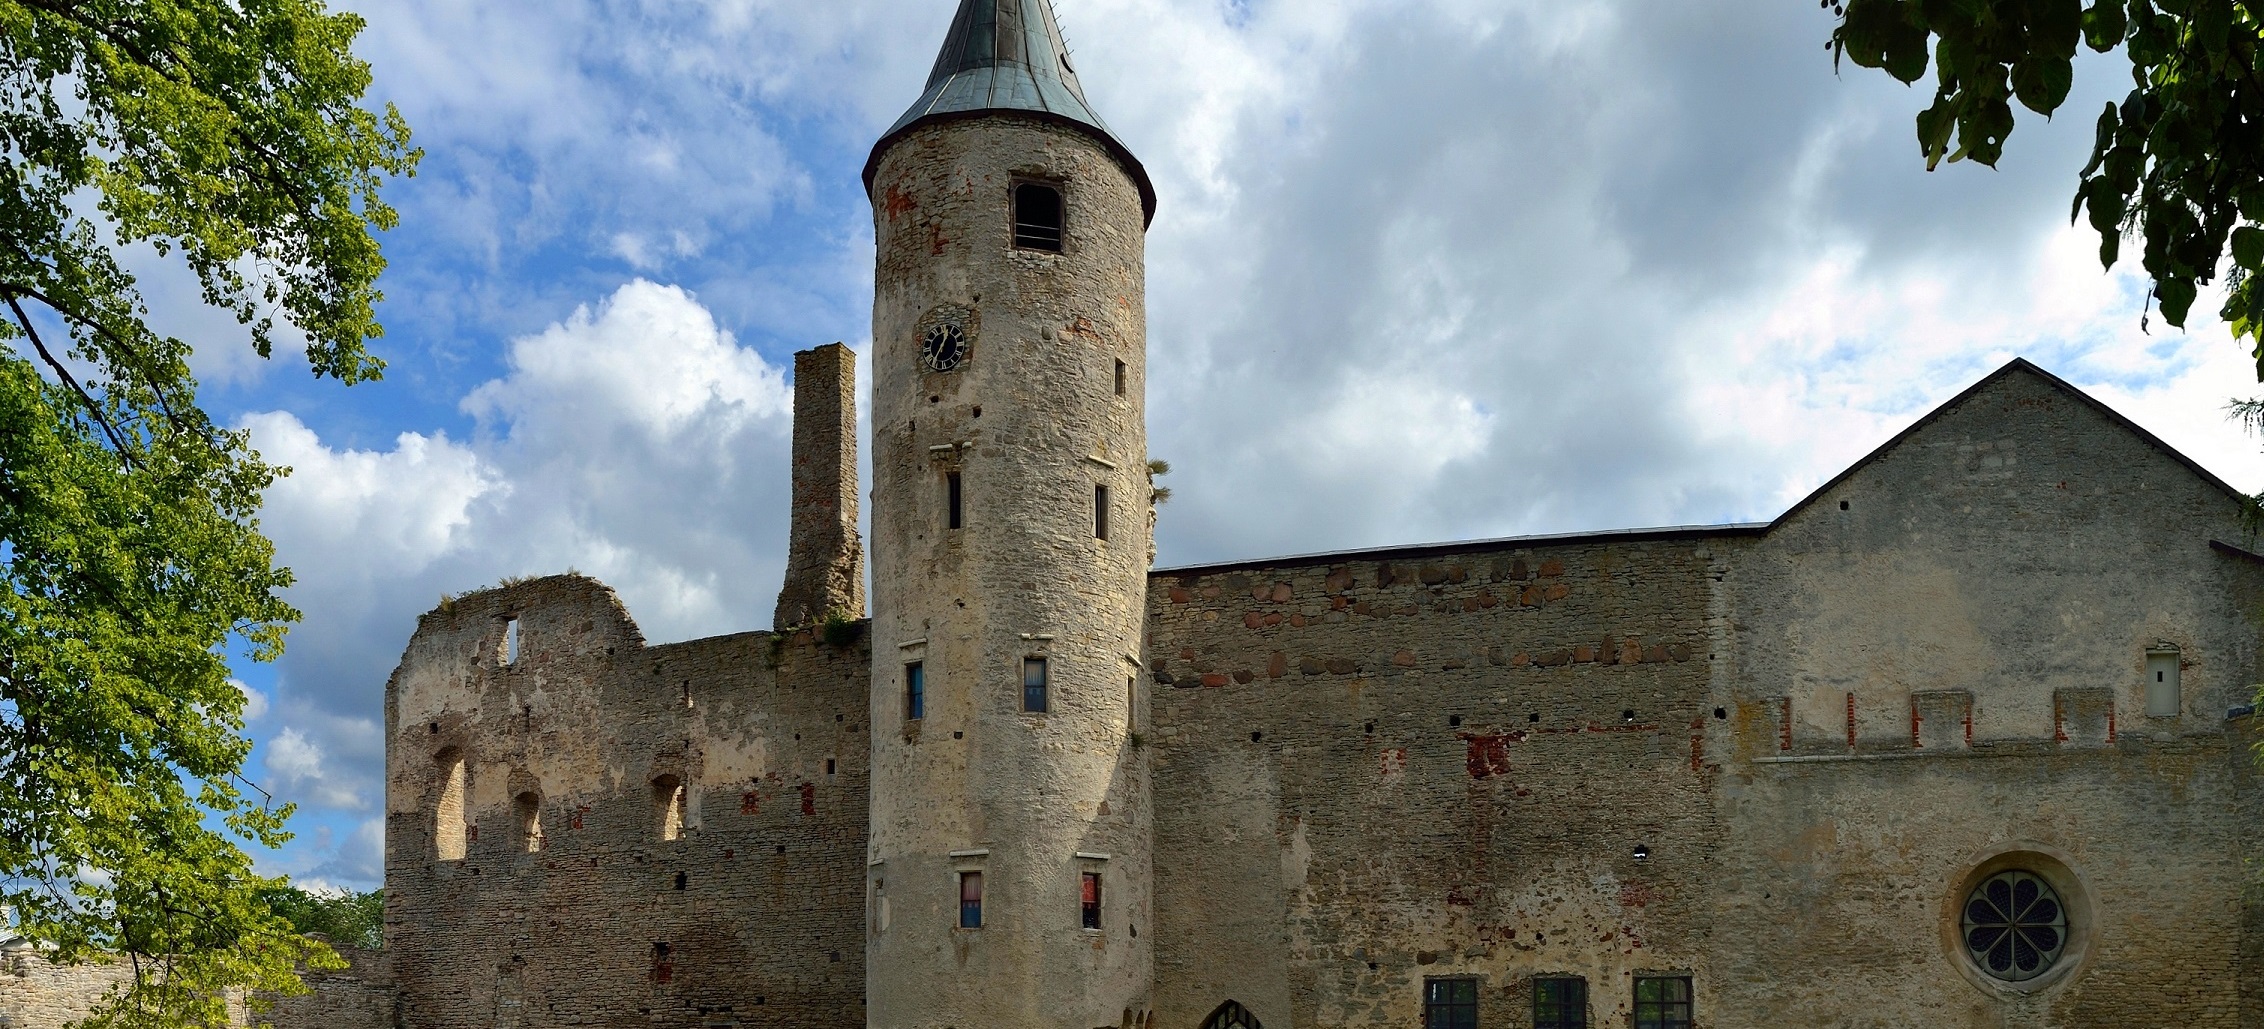 10 Historic Estonian Castles - HeritageDaily - Heritage ...